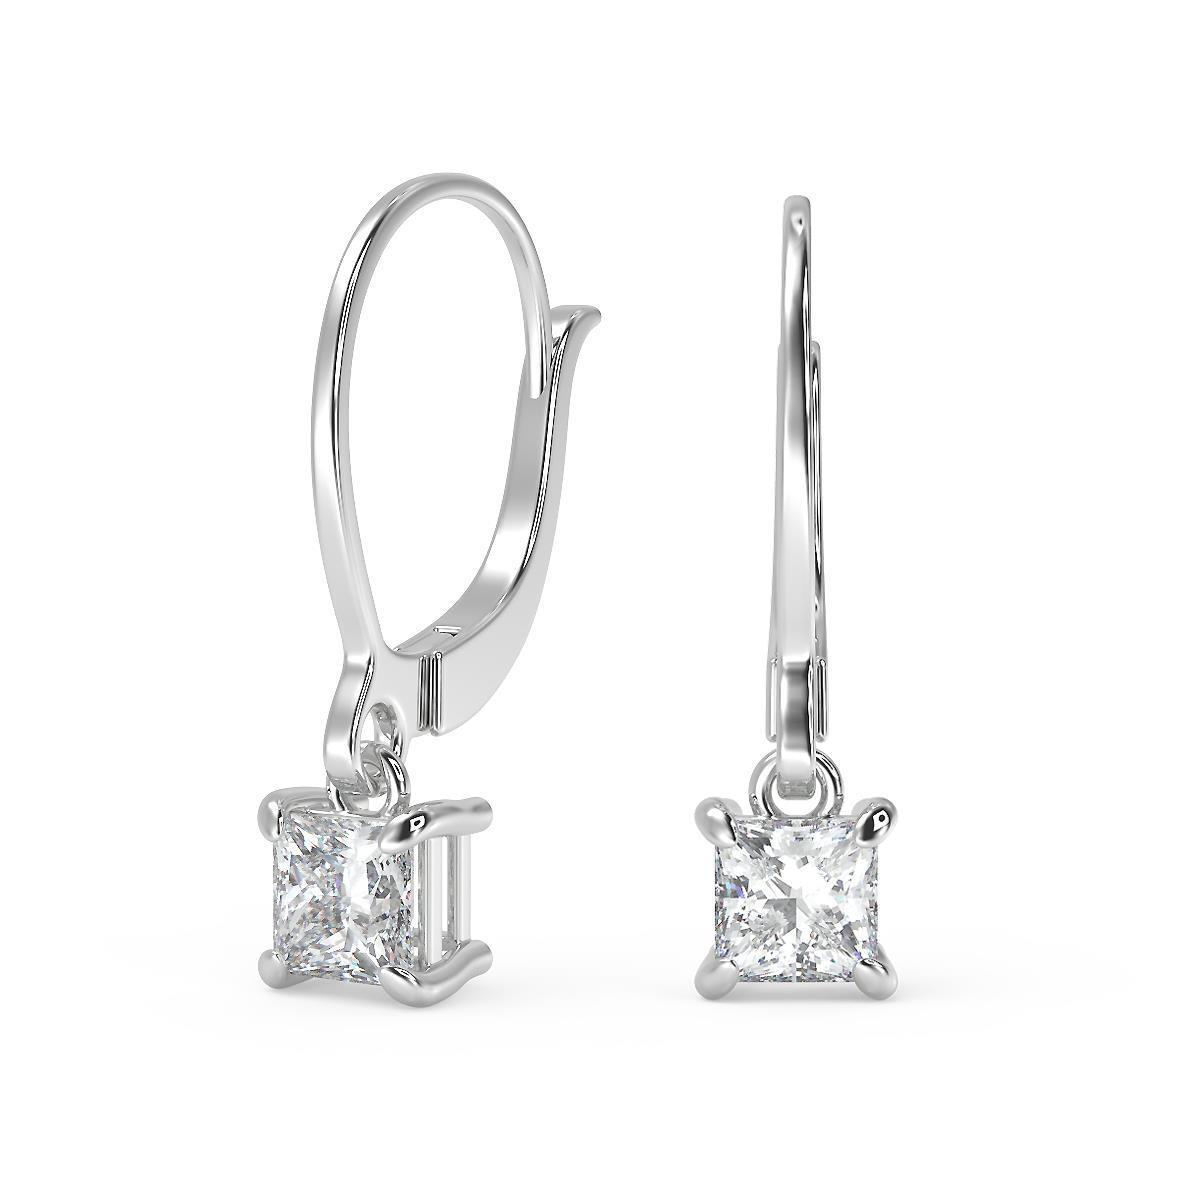 5.6 Ct Princess Cut Diamond Earrings VS2 H Leverback White Gold 14k | eBay